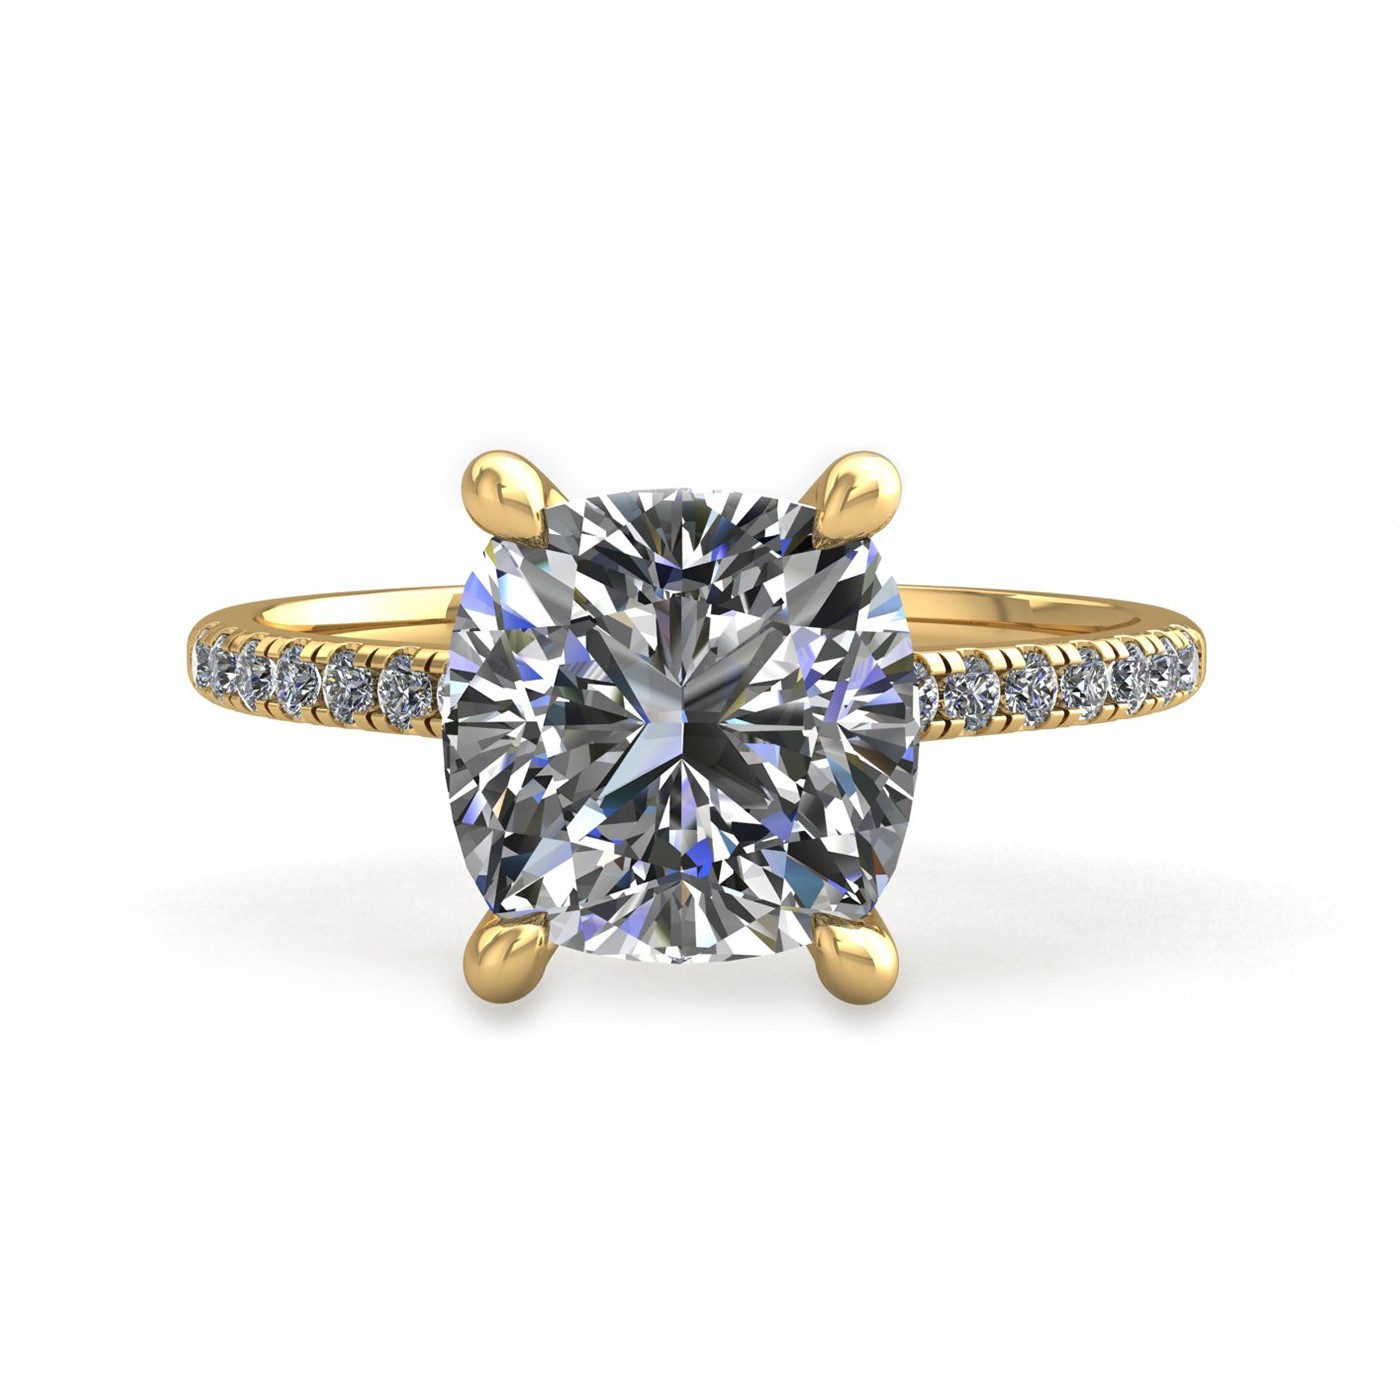 18k yellow gold 2.5ct 4 prongs cushion cut diamond engagement ring with whisper thin pavÉ set band